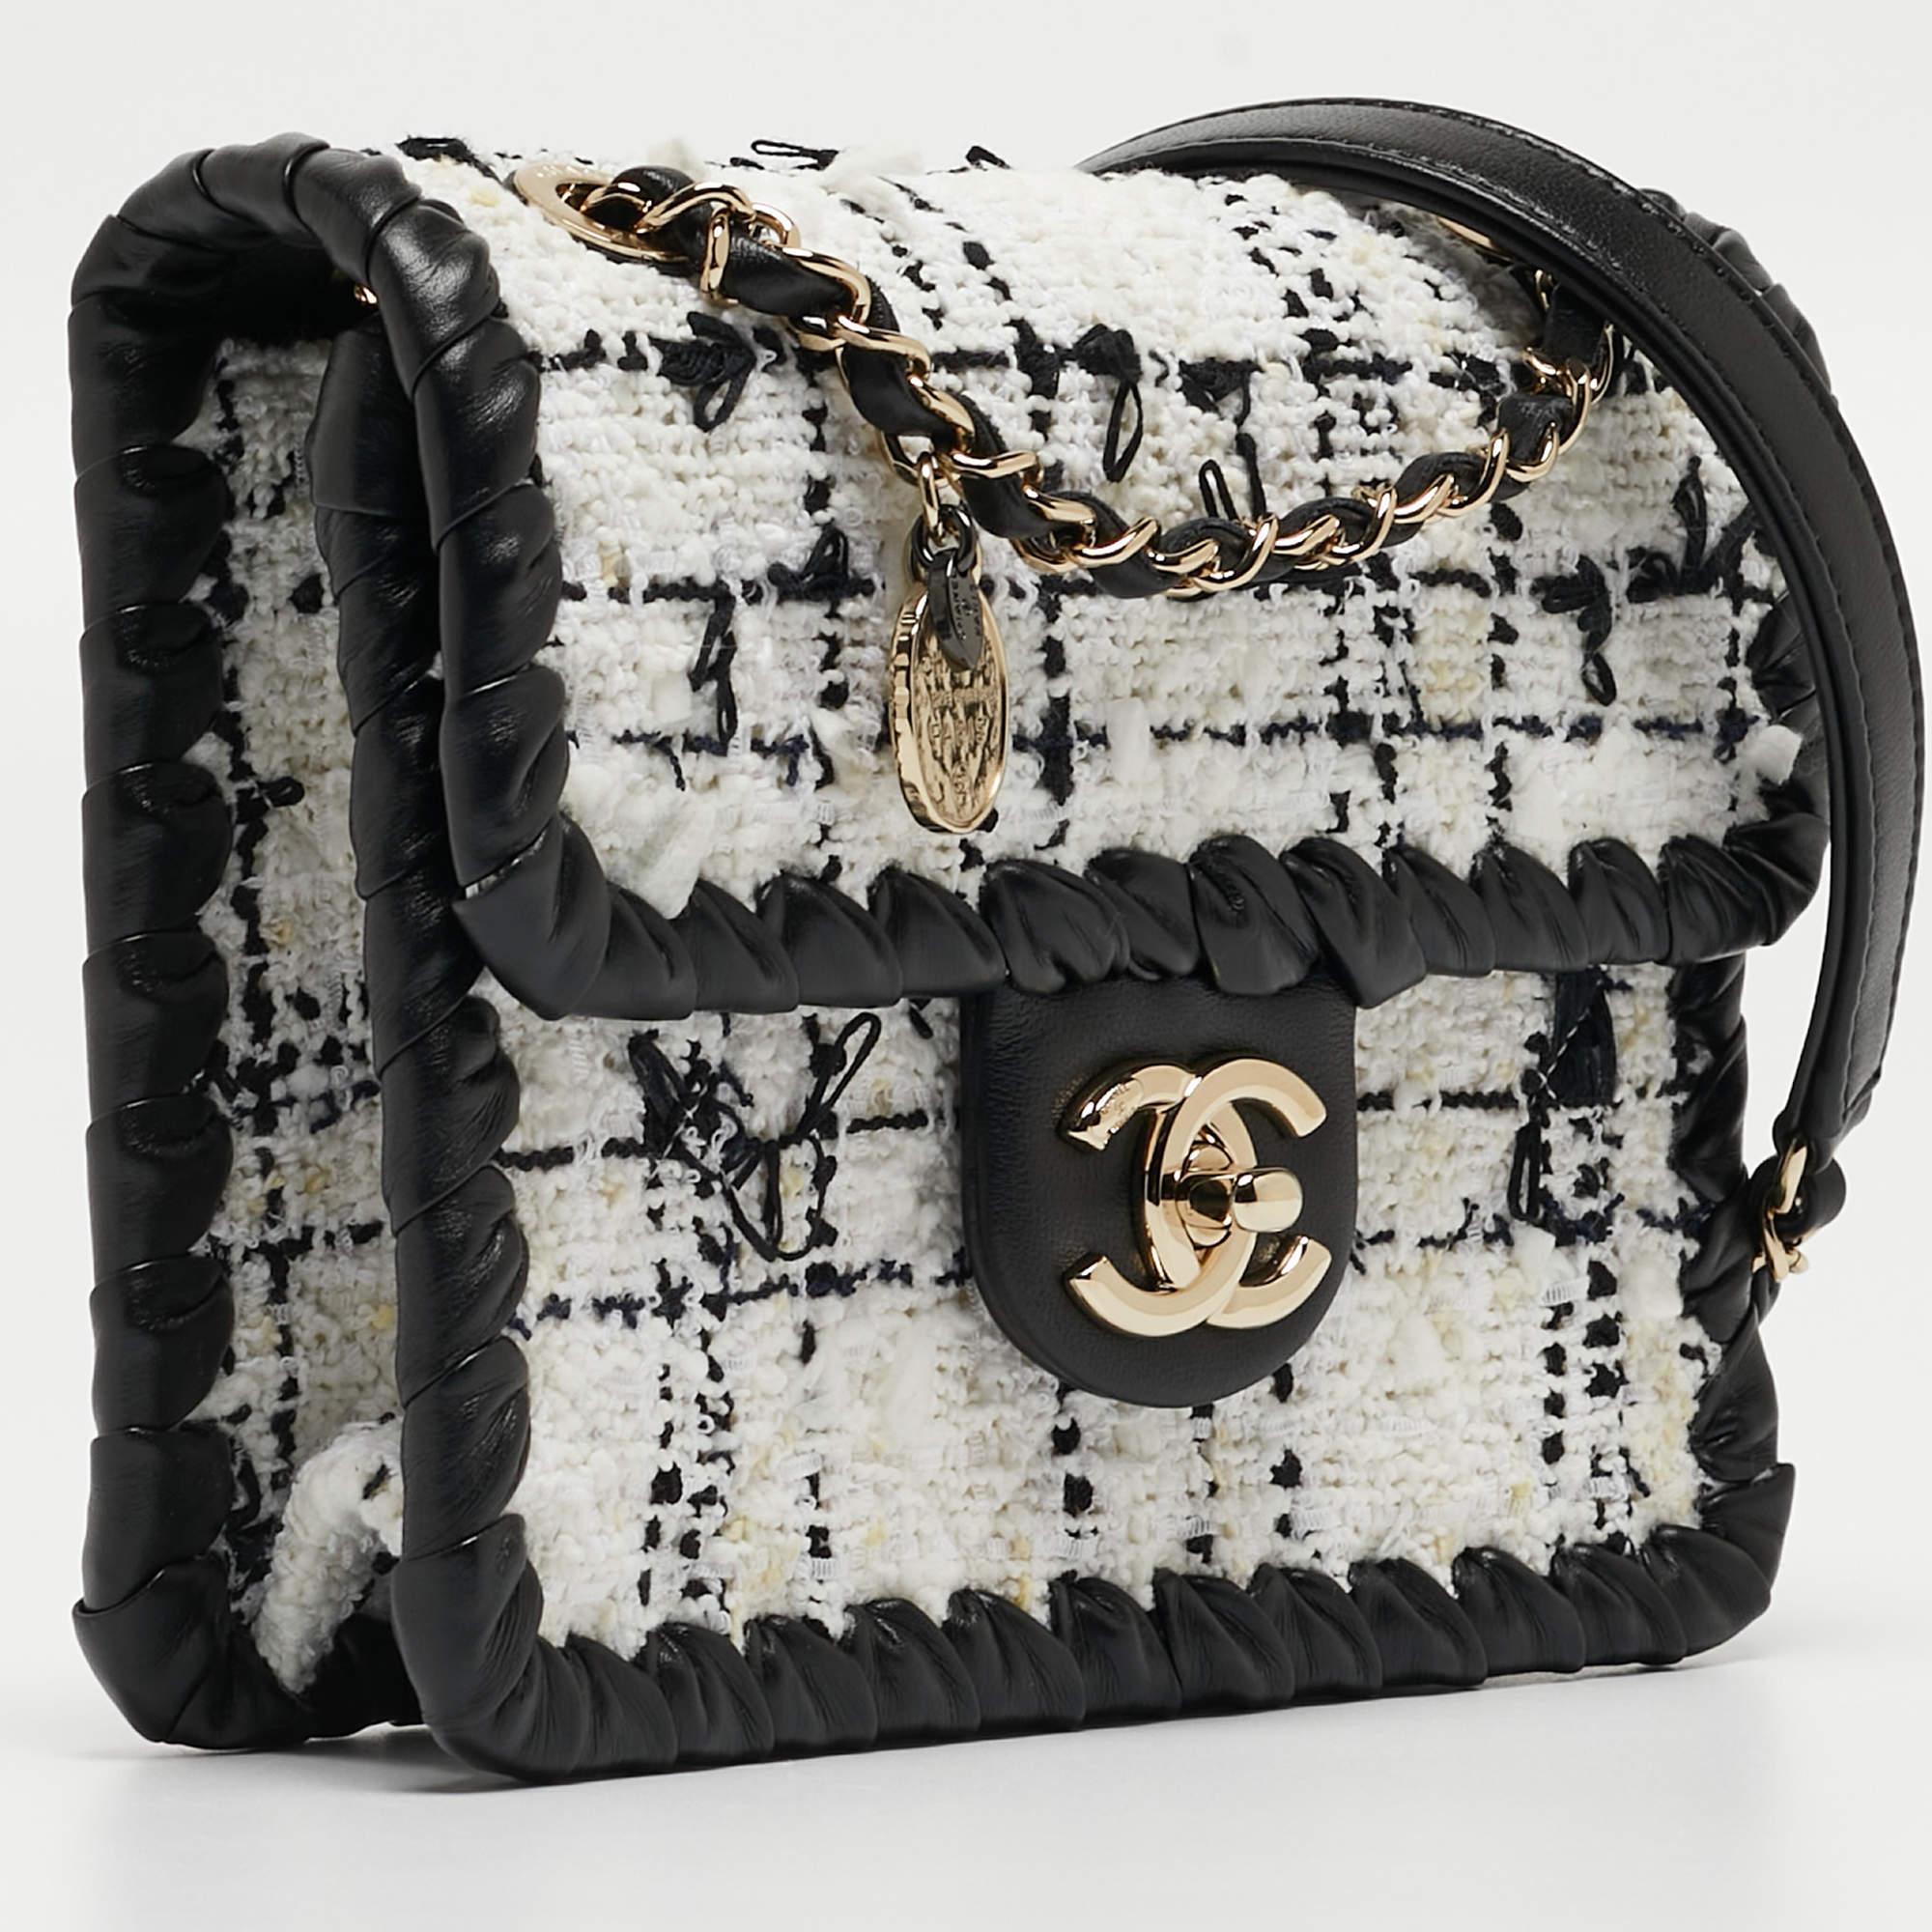 Chanel - Mini sac à rabat My Own Frame en cuir et tweed noir et blanc 7